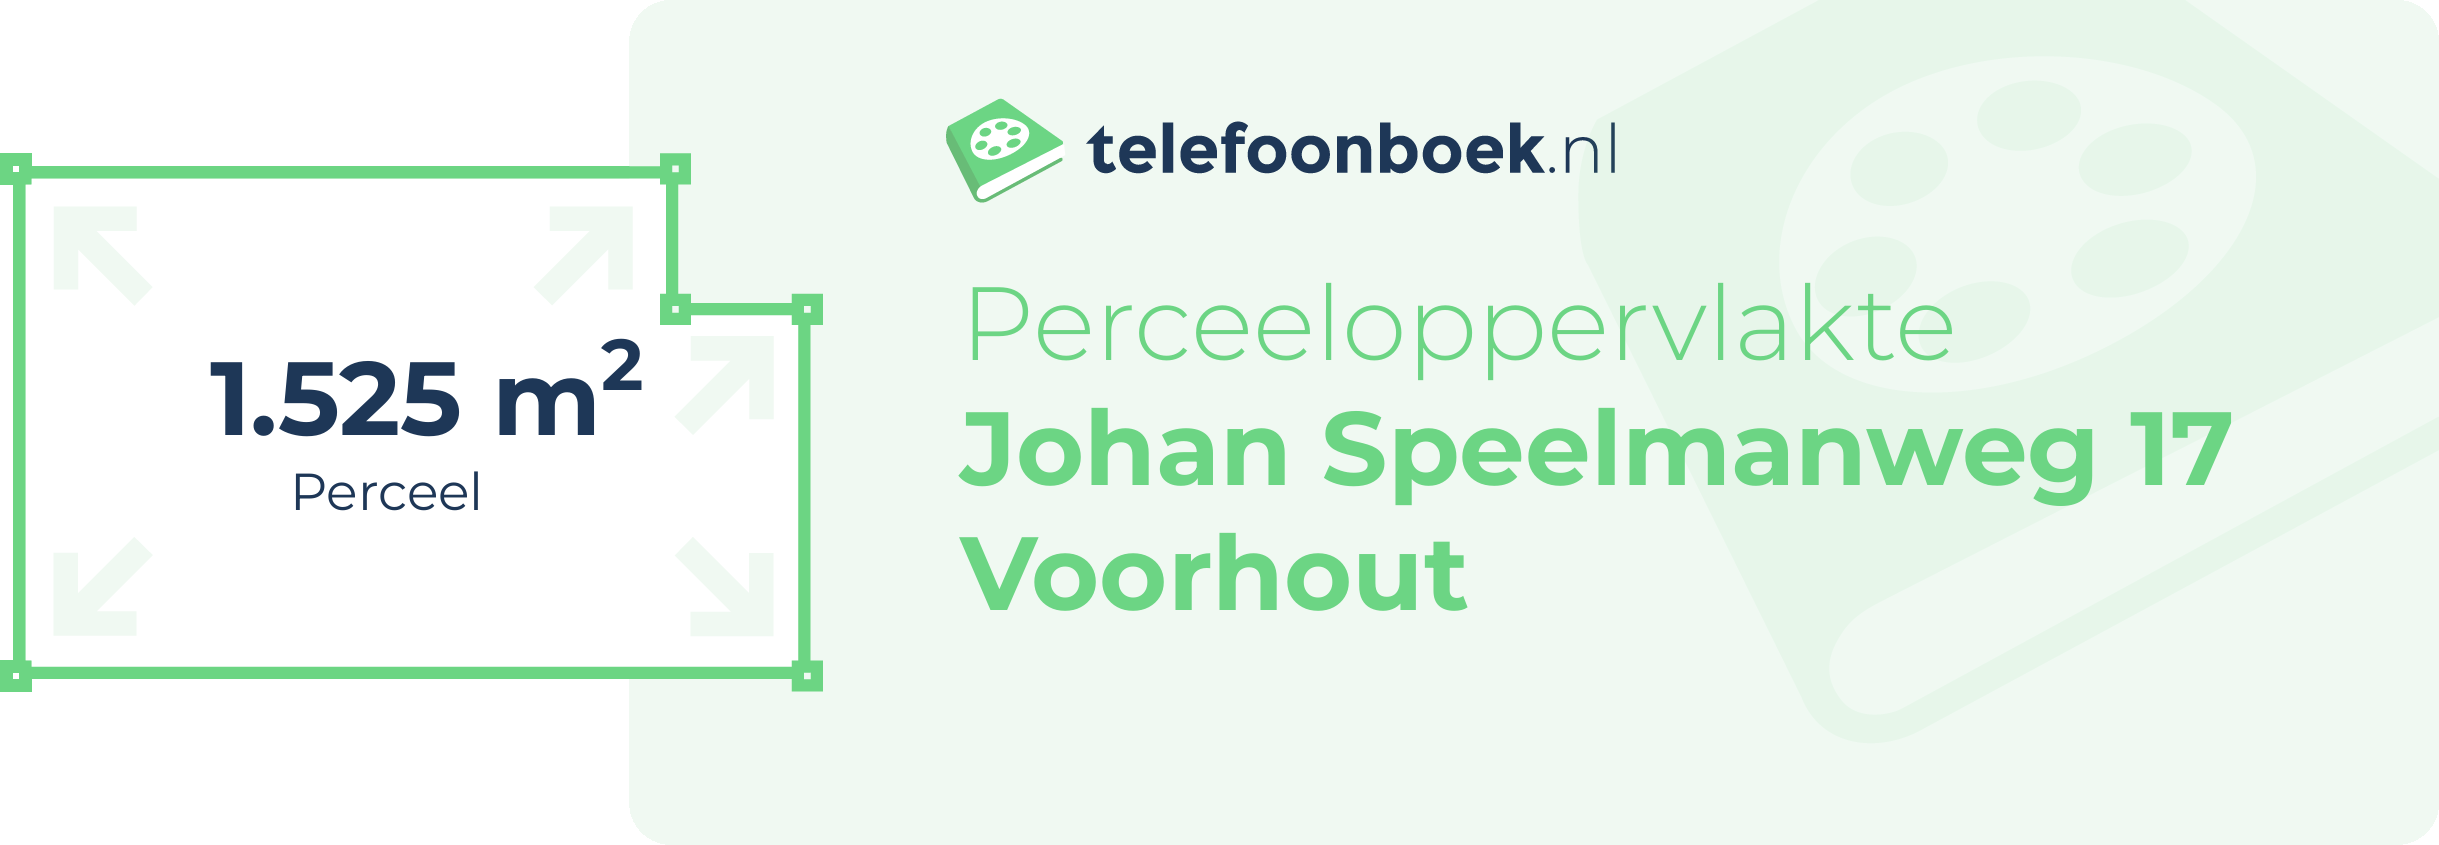 Perceeloppervlakte Johan Speelmanweg 17 Voorhout